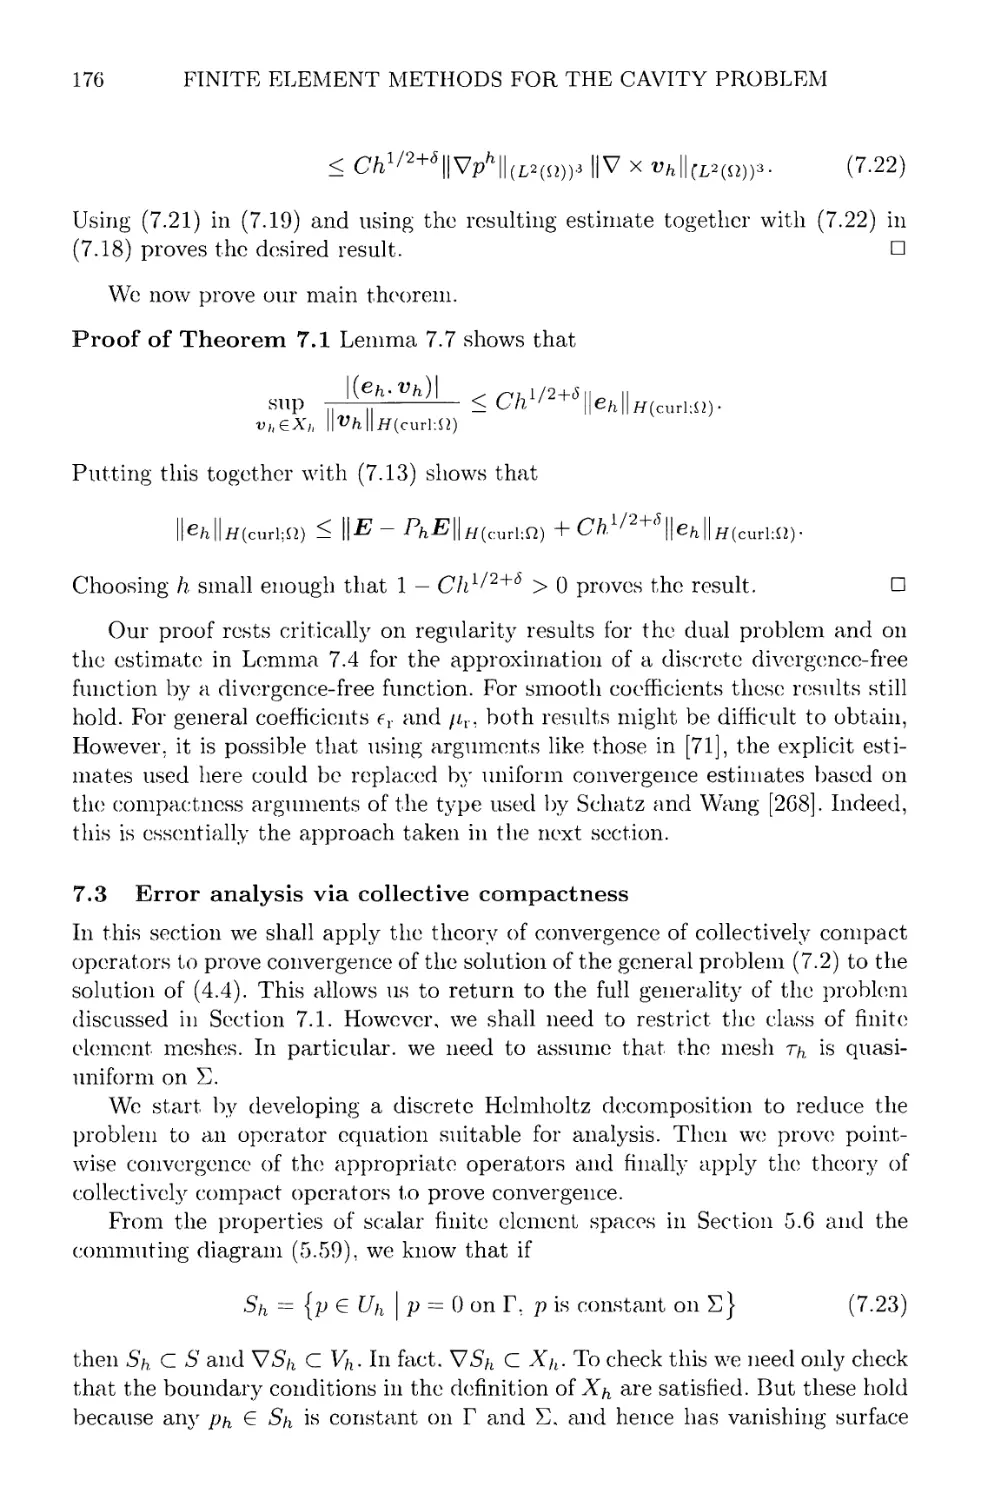 7.3 Error analysis via collective compactness